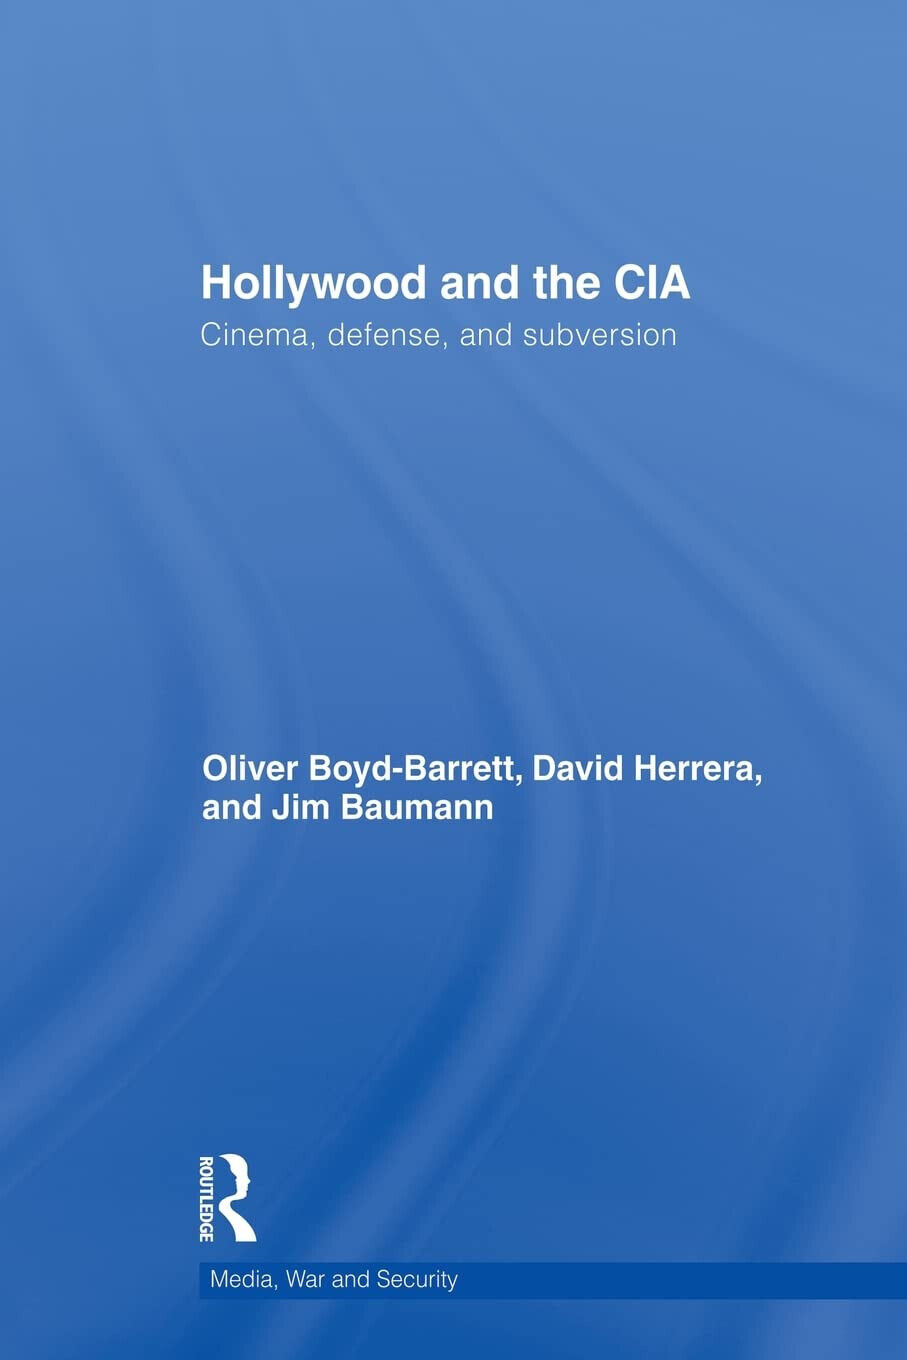 Hollywood and the CIA -Oliver Boyd-Barrett, David Herrera -Taylor & Francis,2012 libro usato